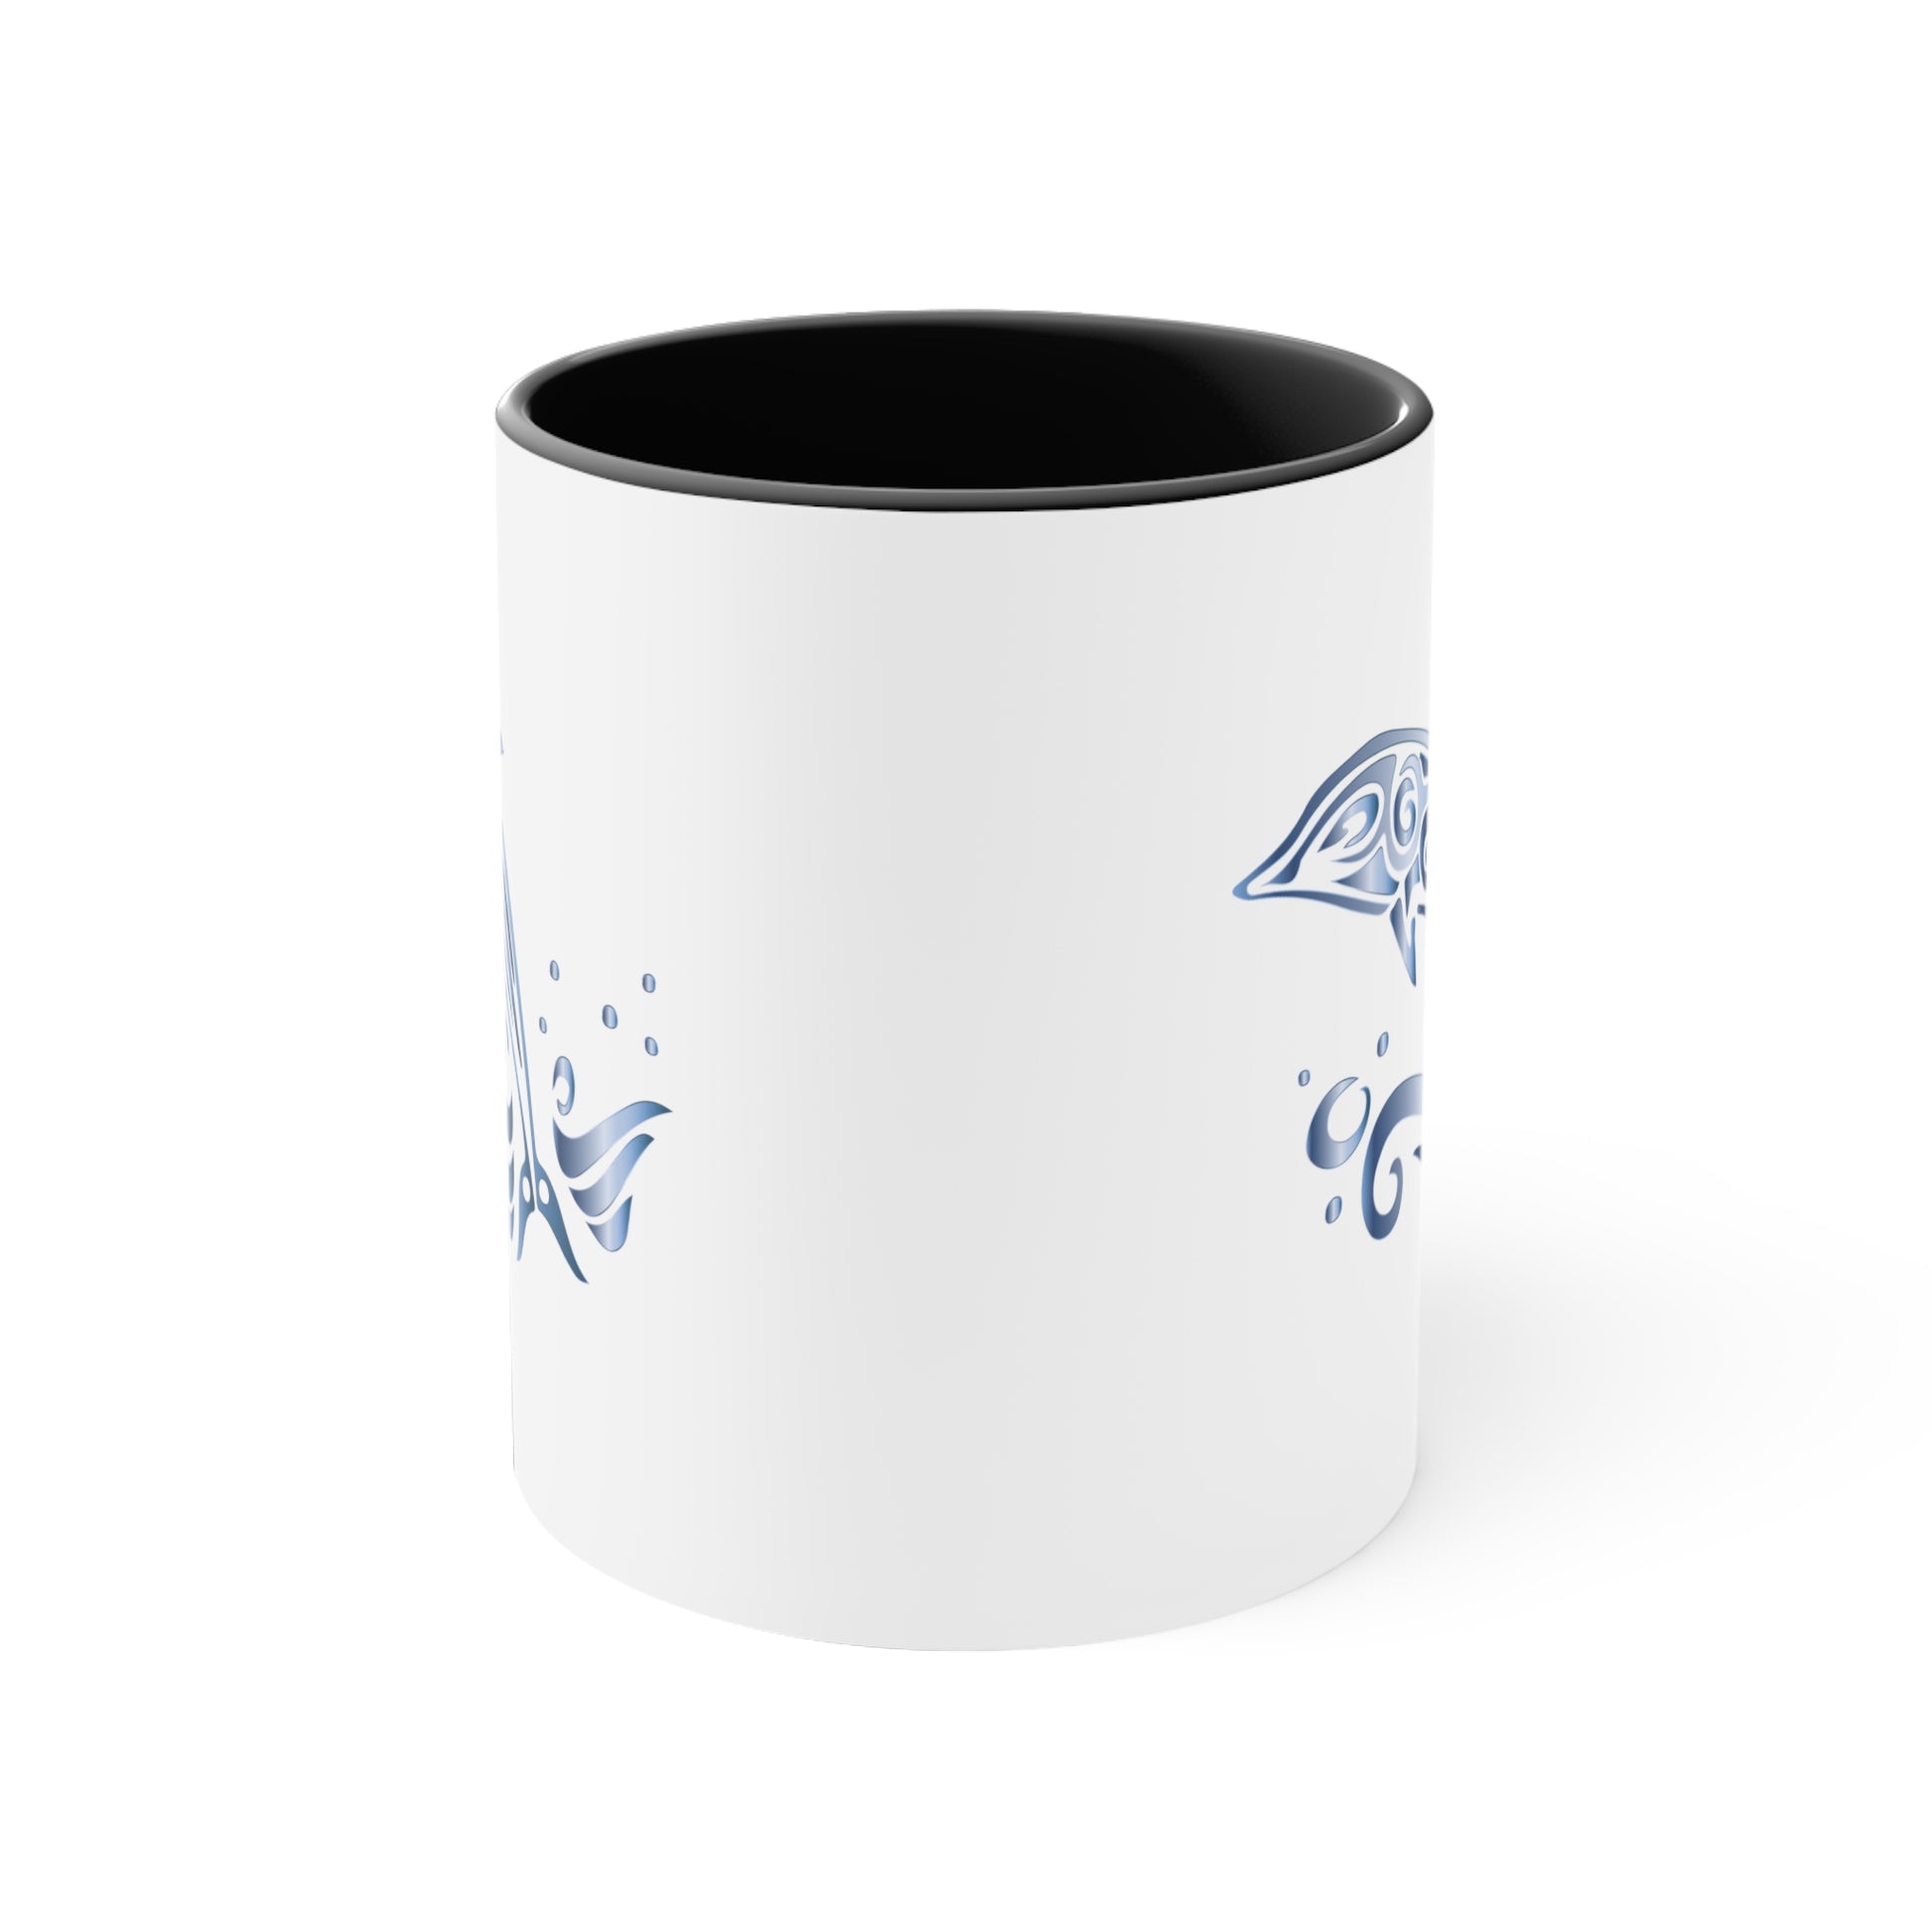 Dolphin Coffee Mug - Double Sided Black Accent White Ceramic 11oz by TheGlassyLass.com